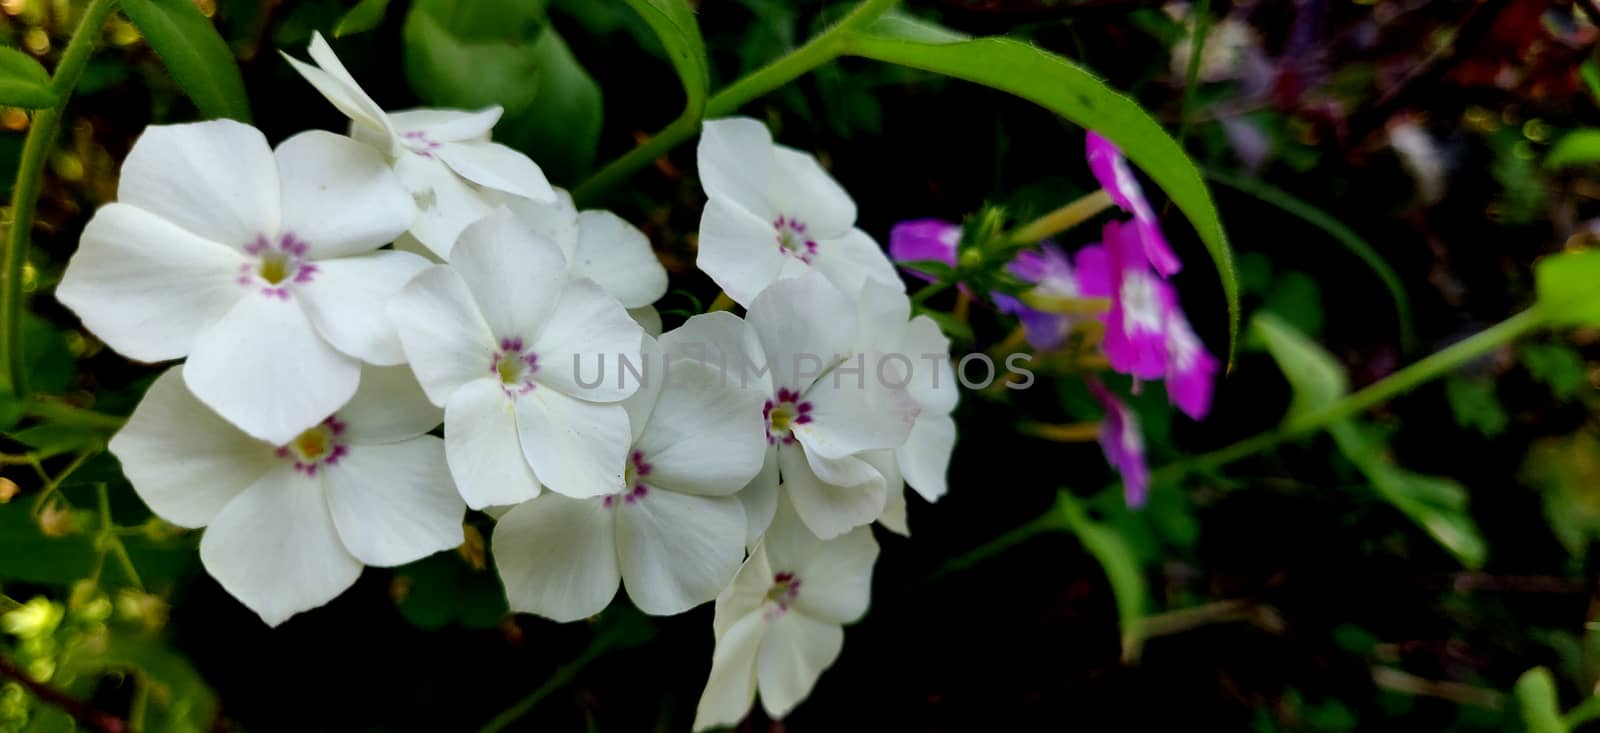 Garden phlox white flowers in a bunch by mshivangi92